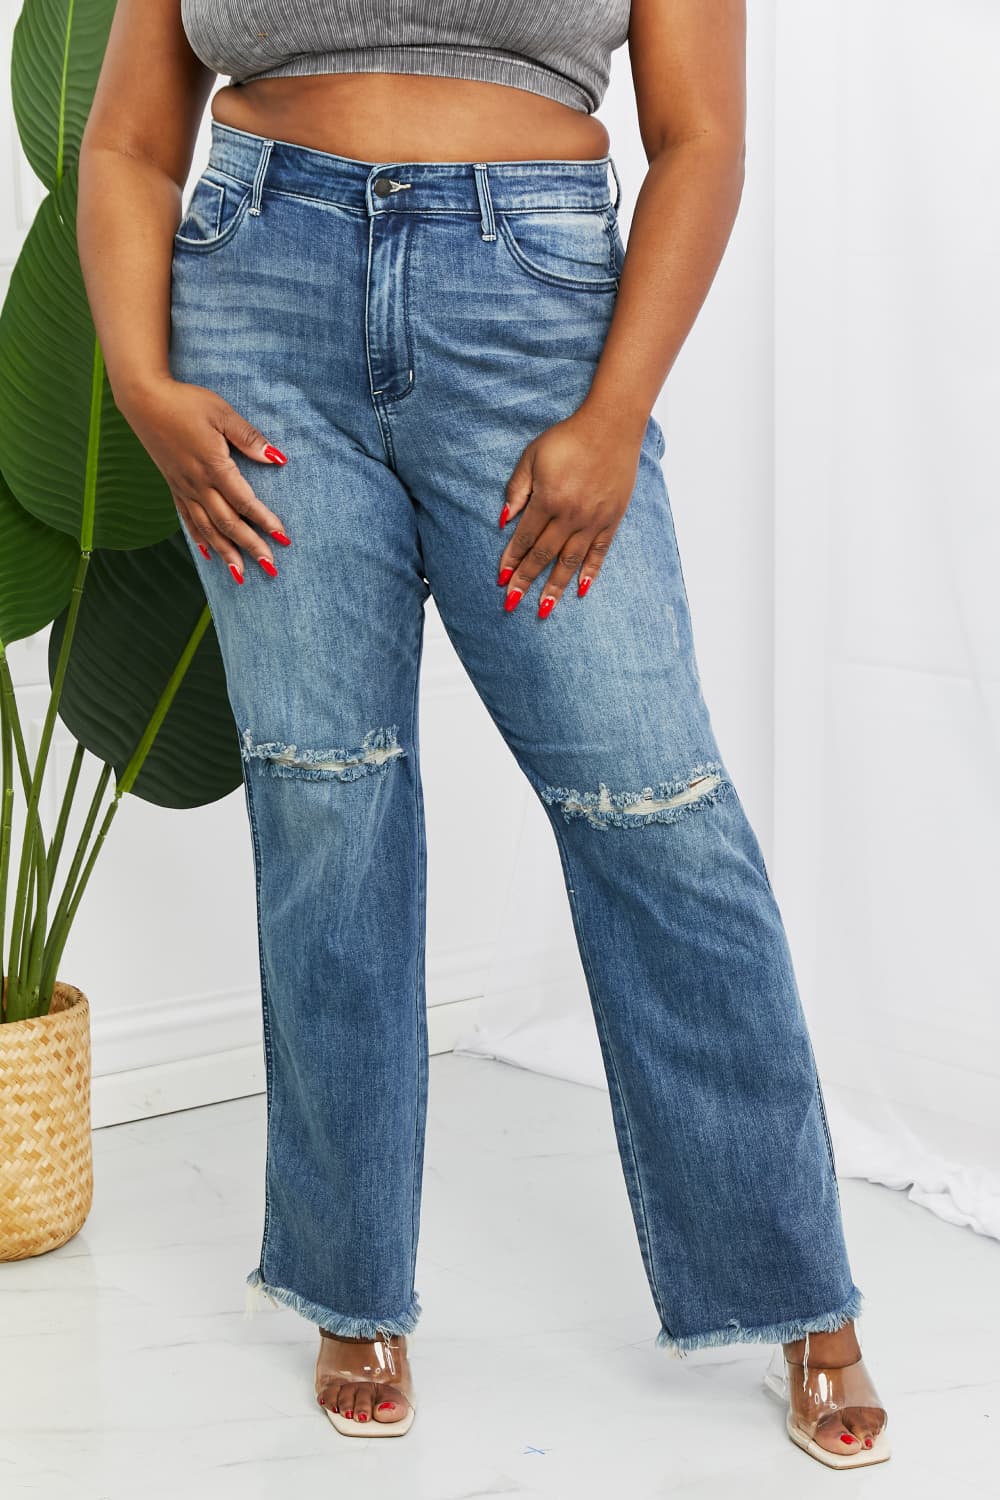 Plus Size, Judy Blue, Hi-Waisted Straight Leg w/Destroy Knee Jeans Style 82498